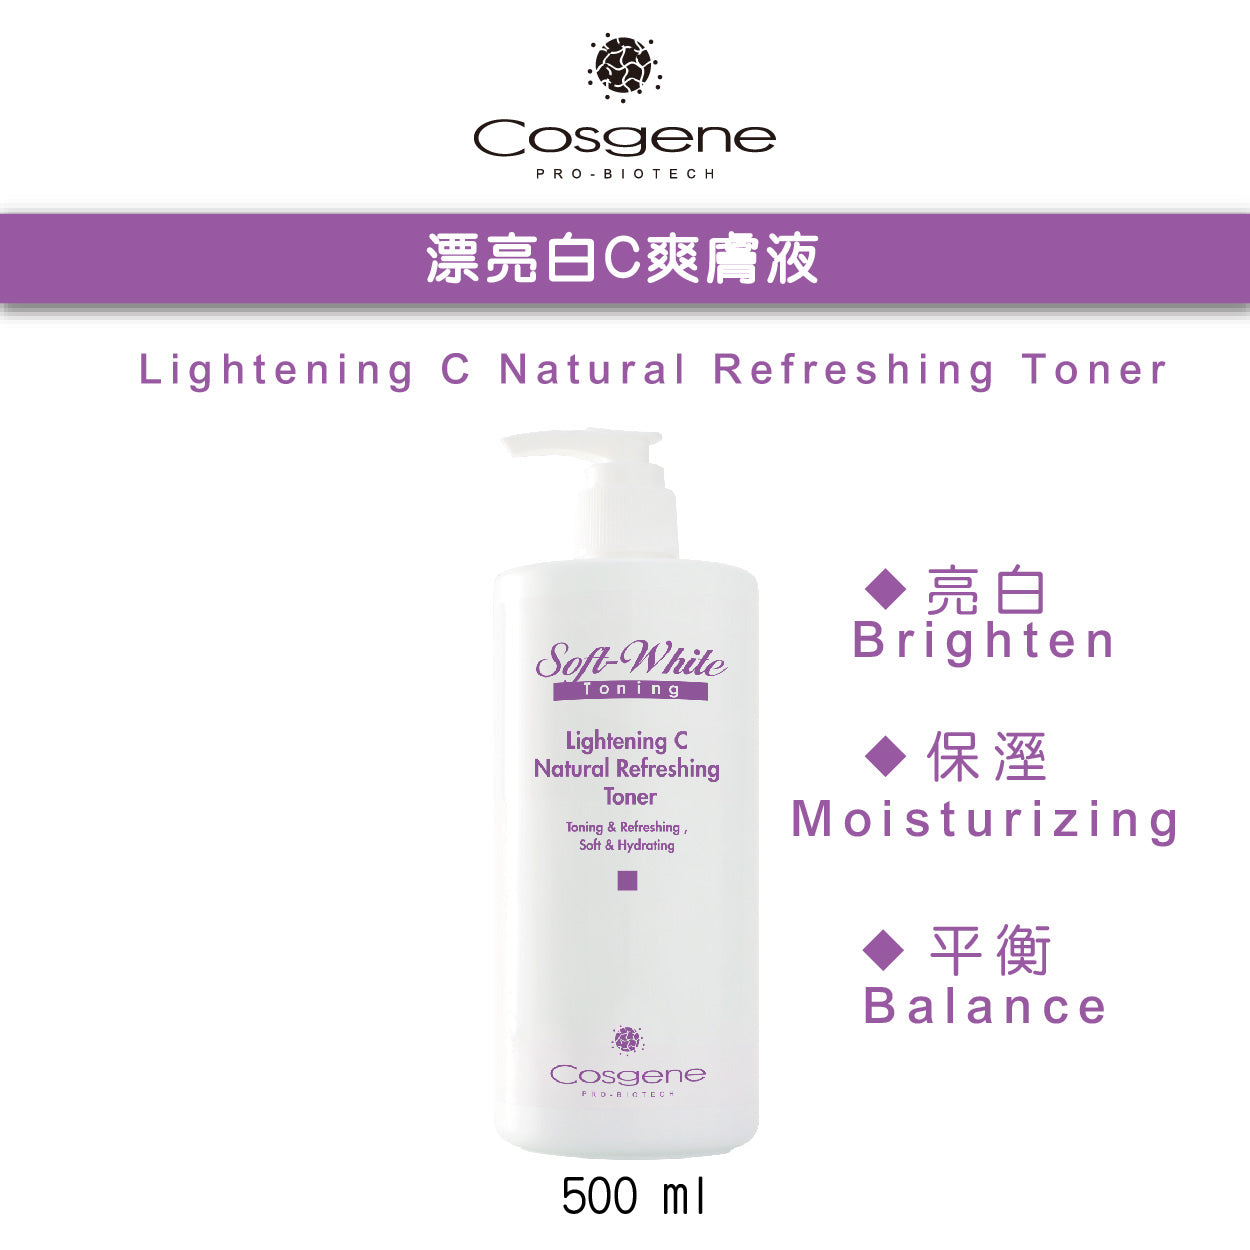 【COSGENE】Lightening C Natural Refreshing Toner